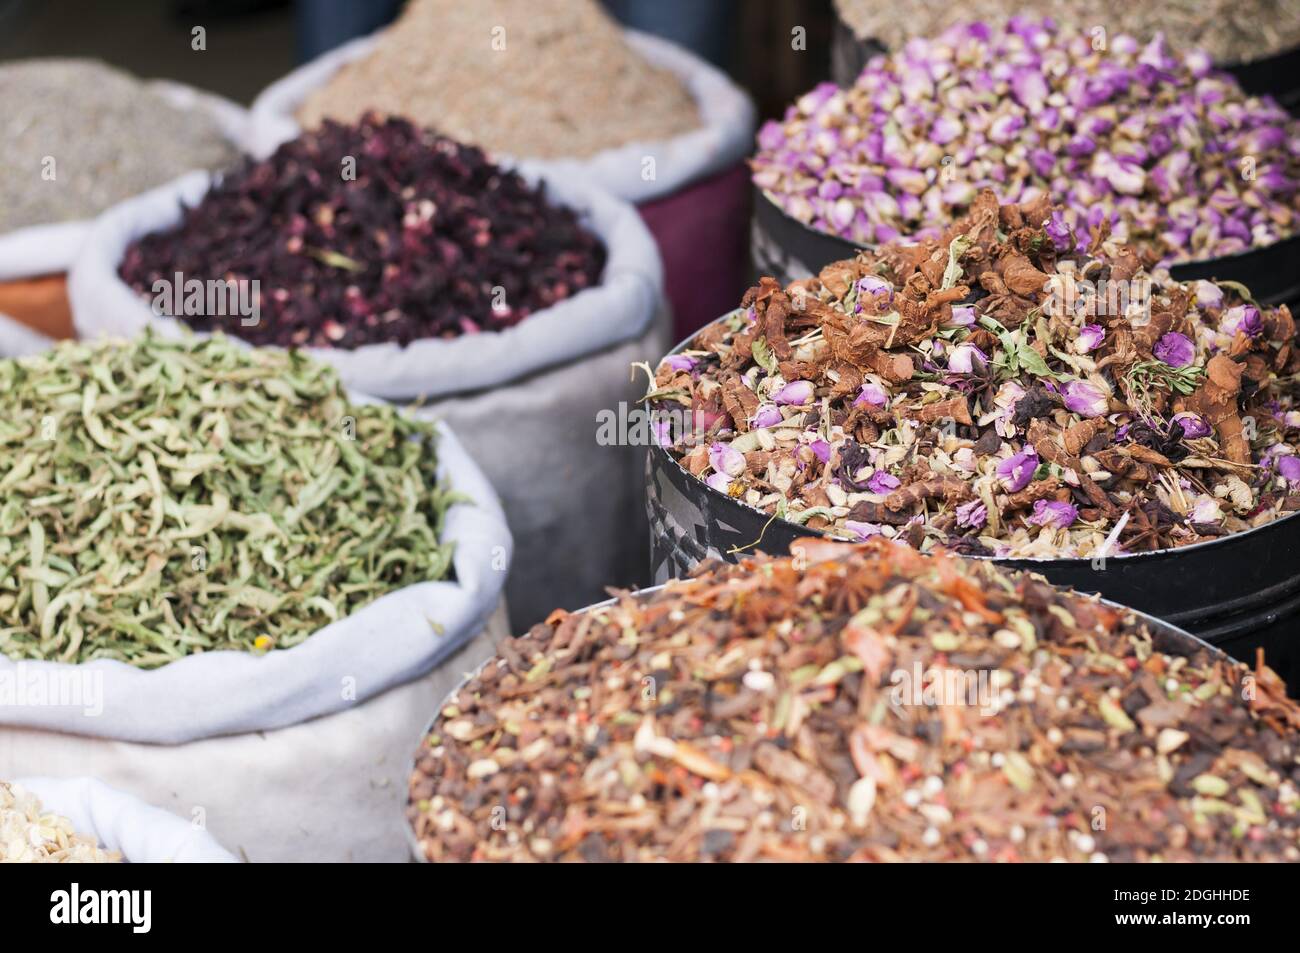 Market stall with sacks full of herbal tea. Stock Photo